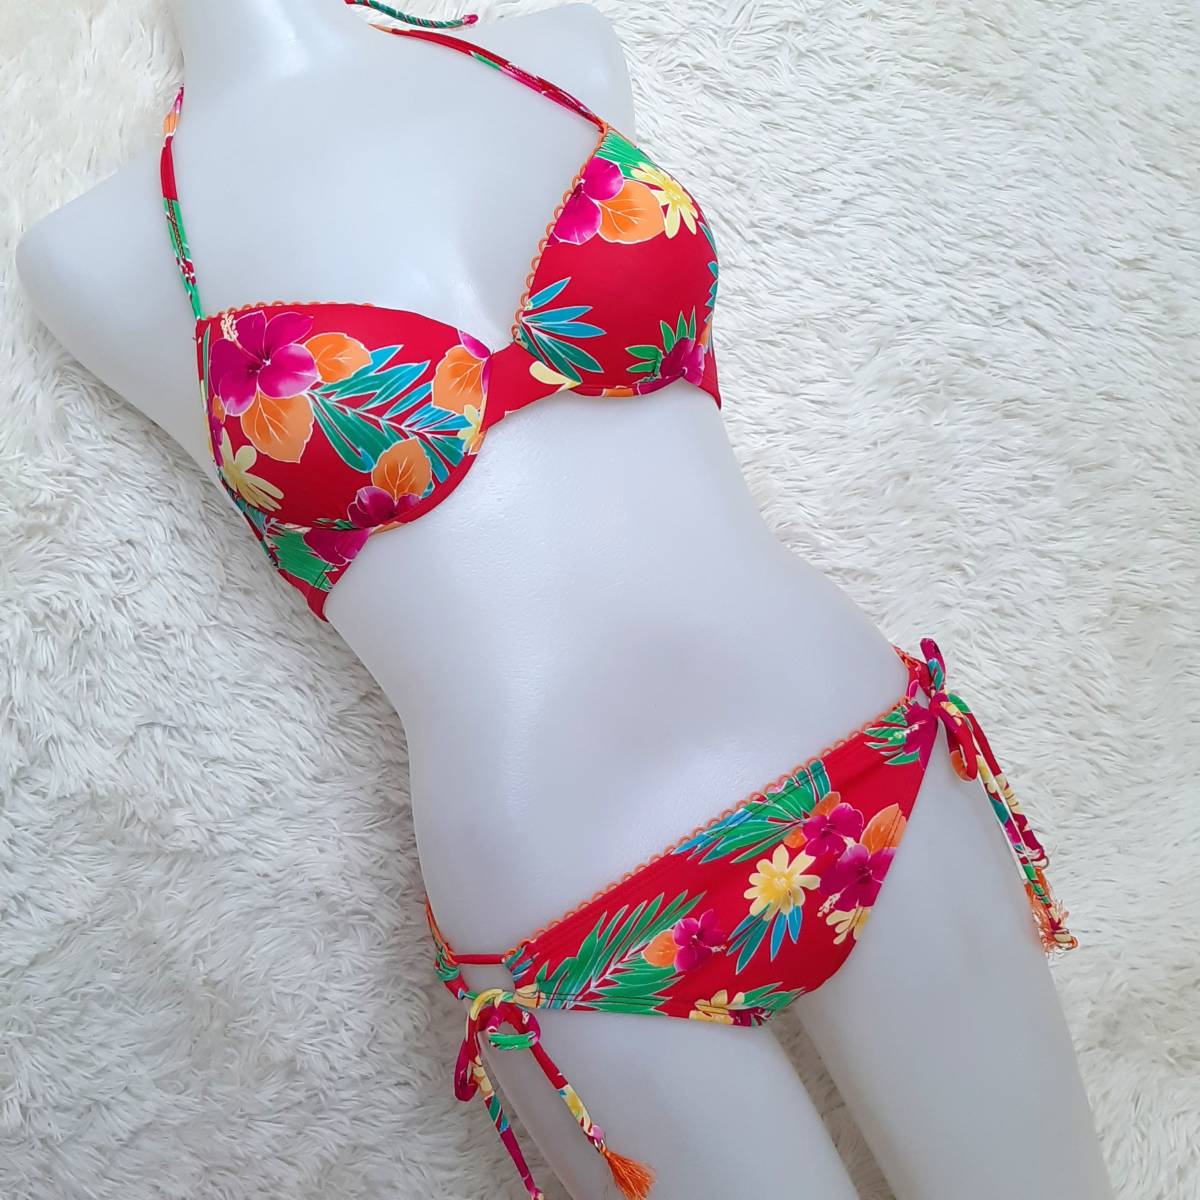  anonymity delivery *Hobie floral print lemon pad wire ... bikini cord bread swimsuit pink L corresponding USA M R